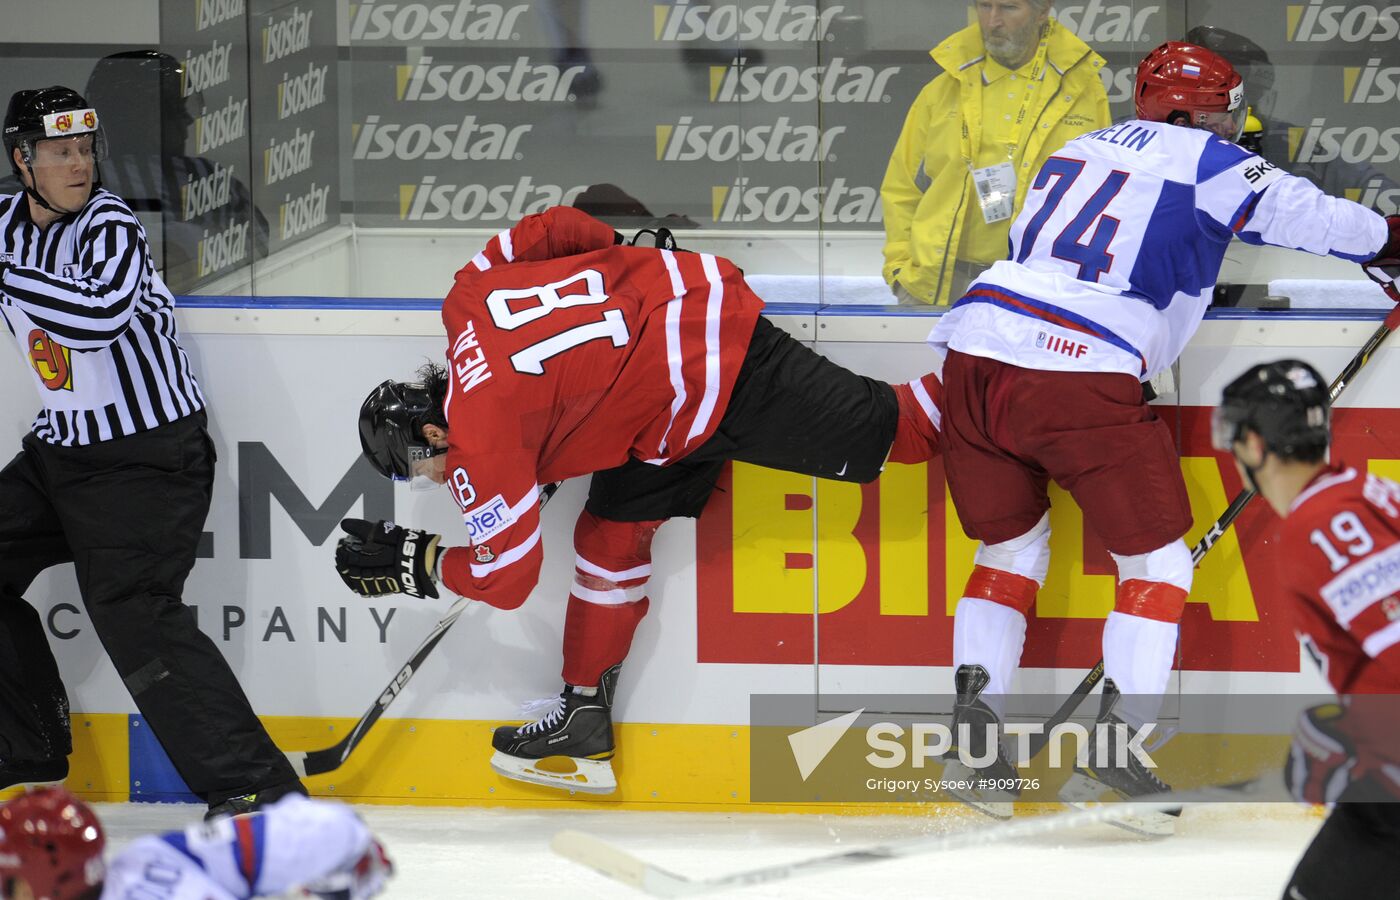 Ice Hockey. World Championship. Russia vs. Canada